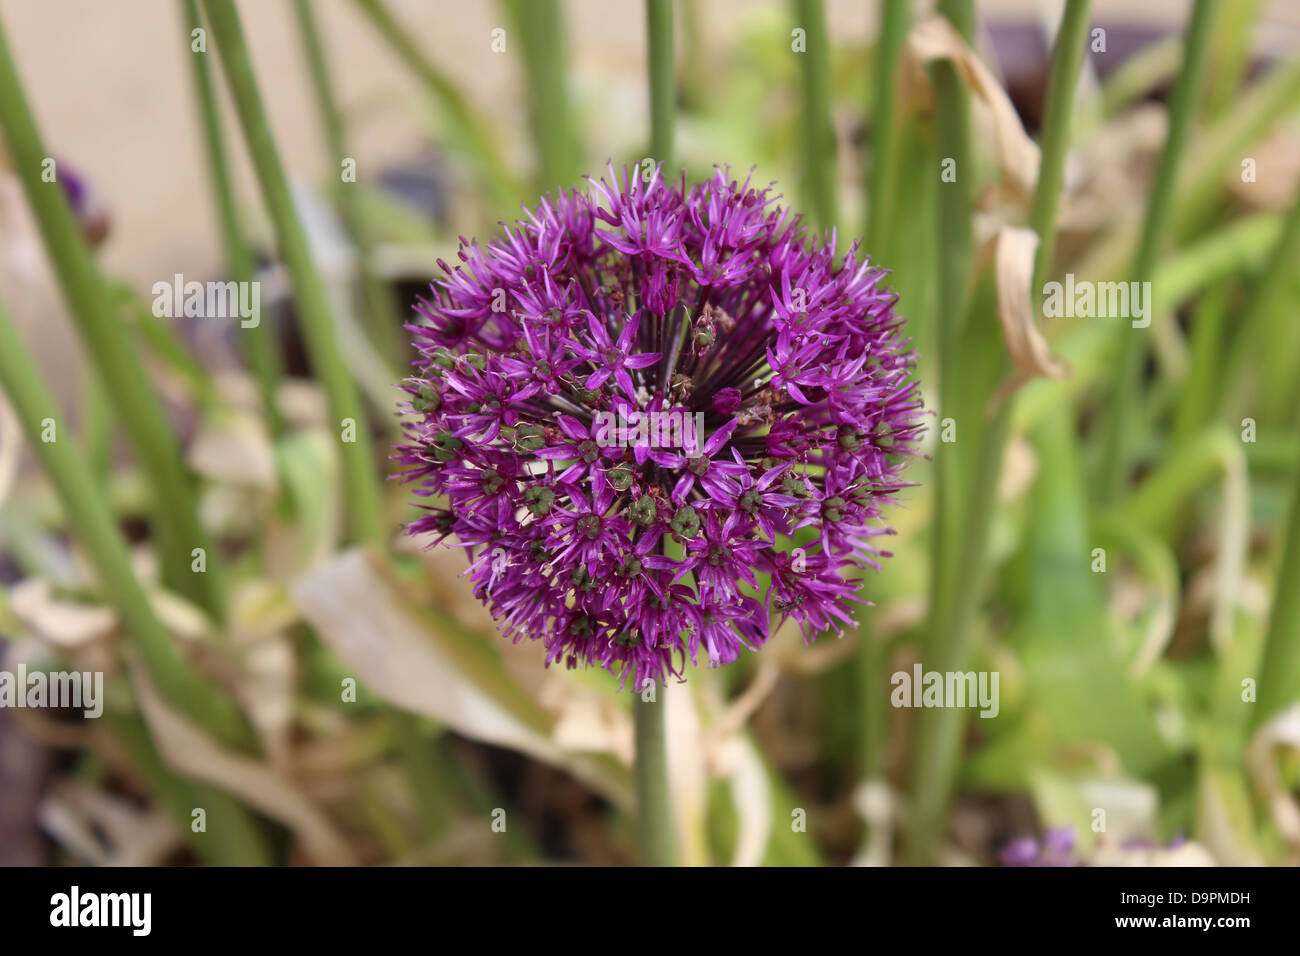 Racimo de flor morada fotografías e imágenes de alta resolución - Alamy